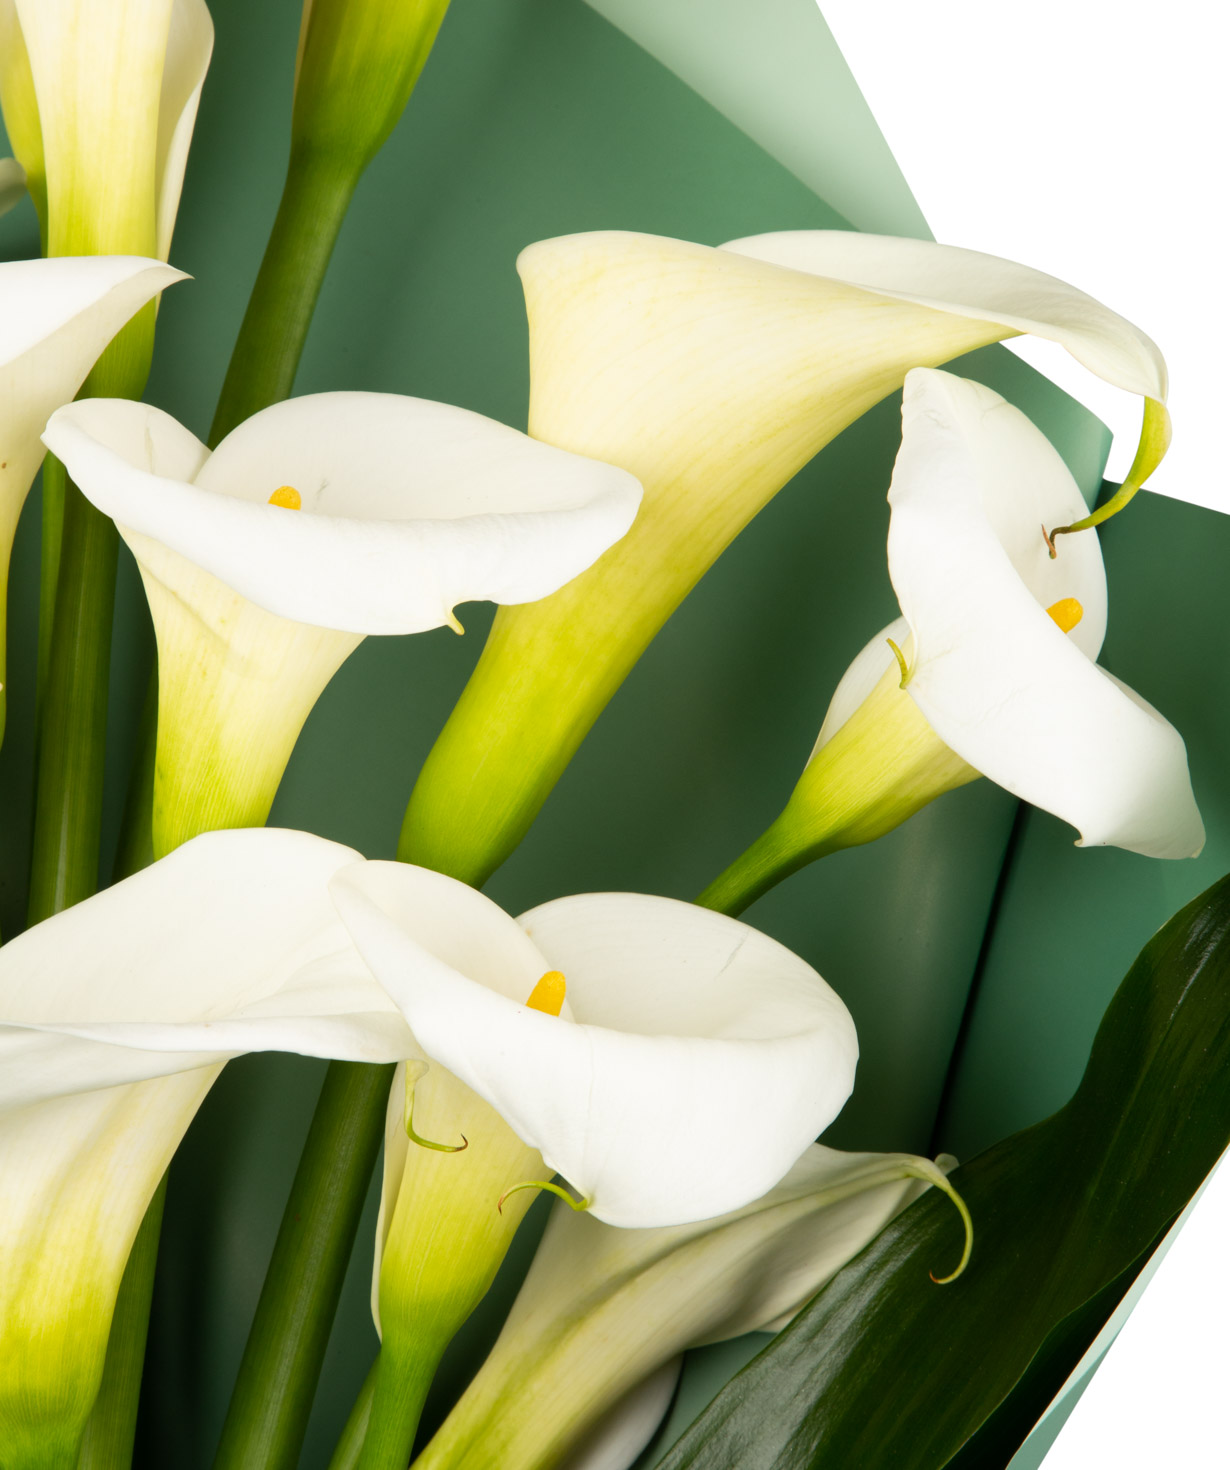 Bouquet `Vilvoorde` with calla lilies